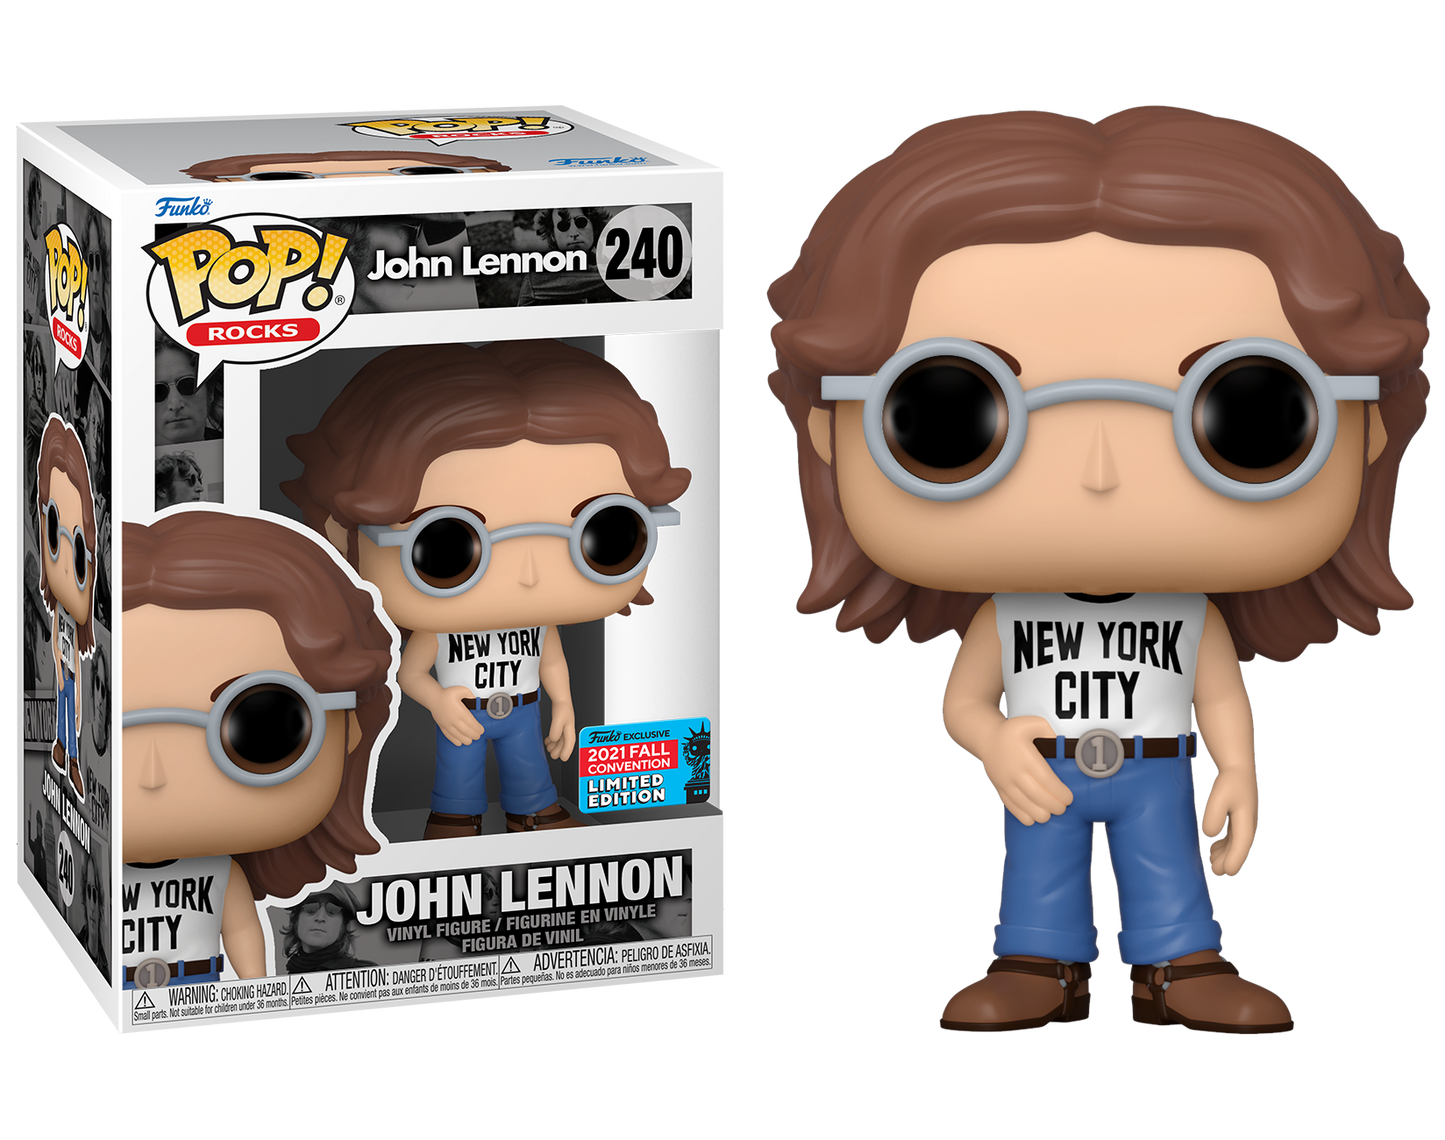 John Lennon - John Lennon in NYCC T-Shirt Festival of Fun Fall Convention 2021 Exclusive Pop! Vinyl